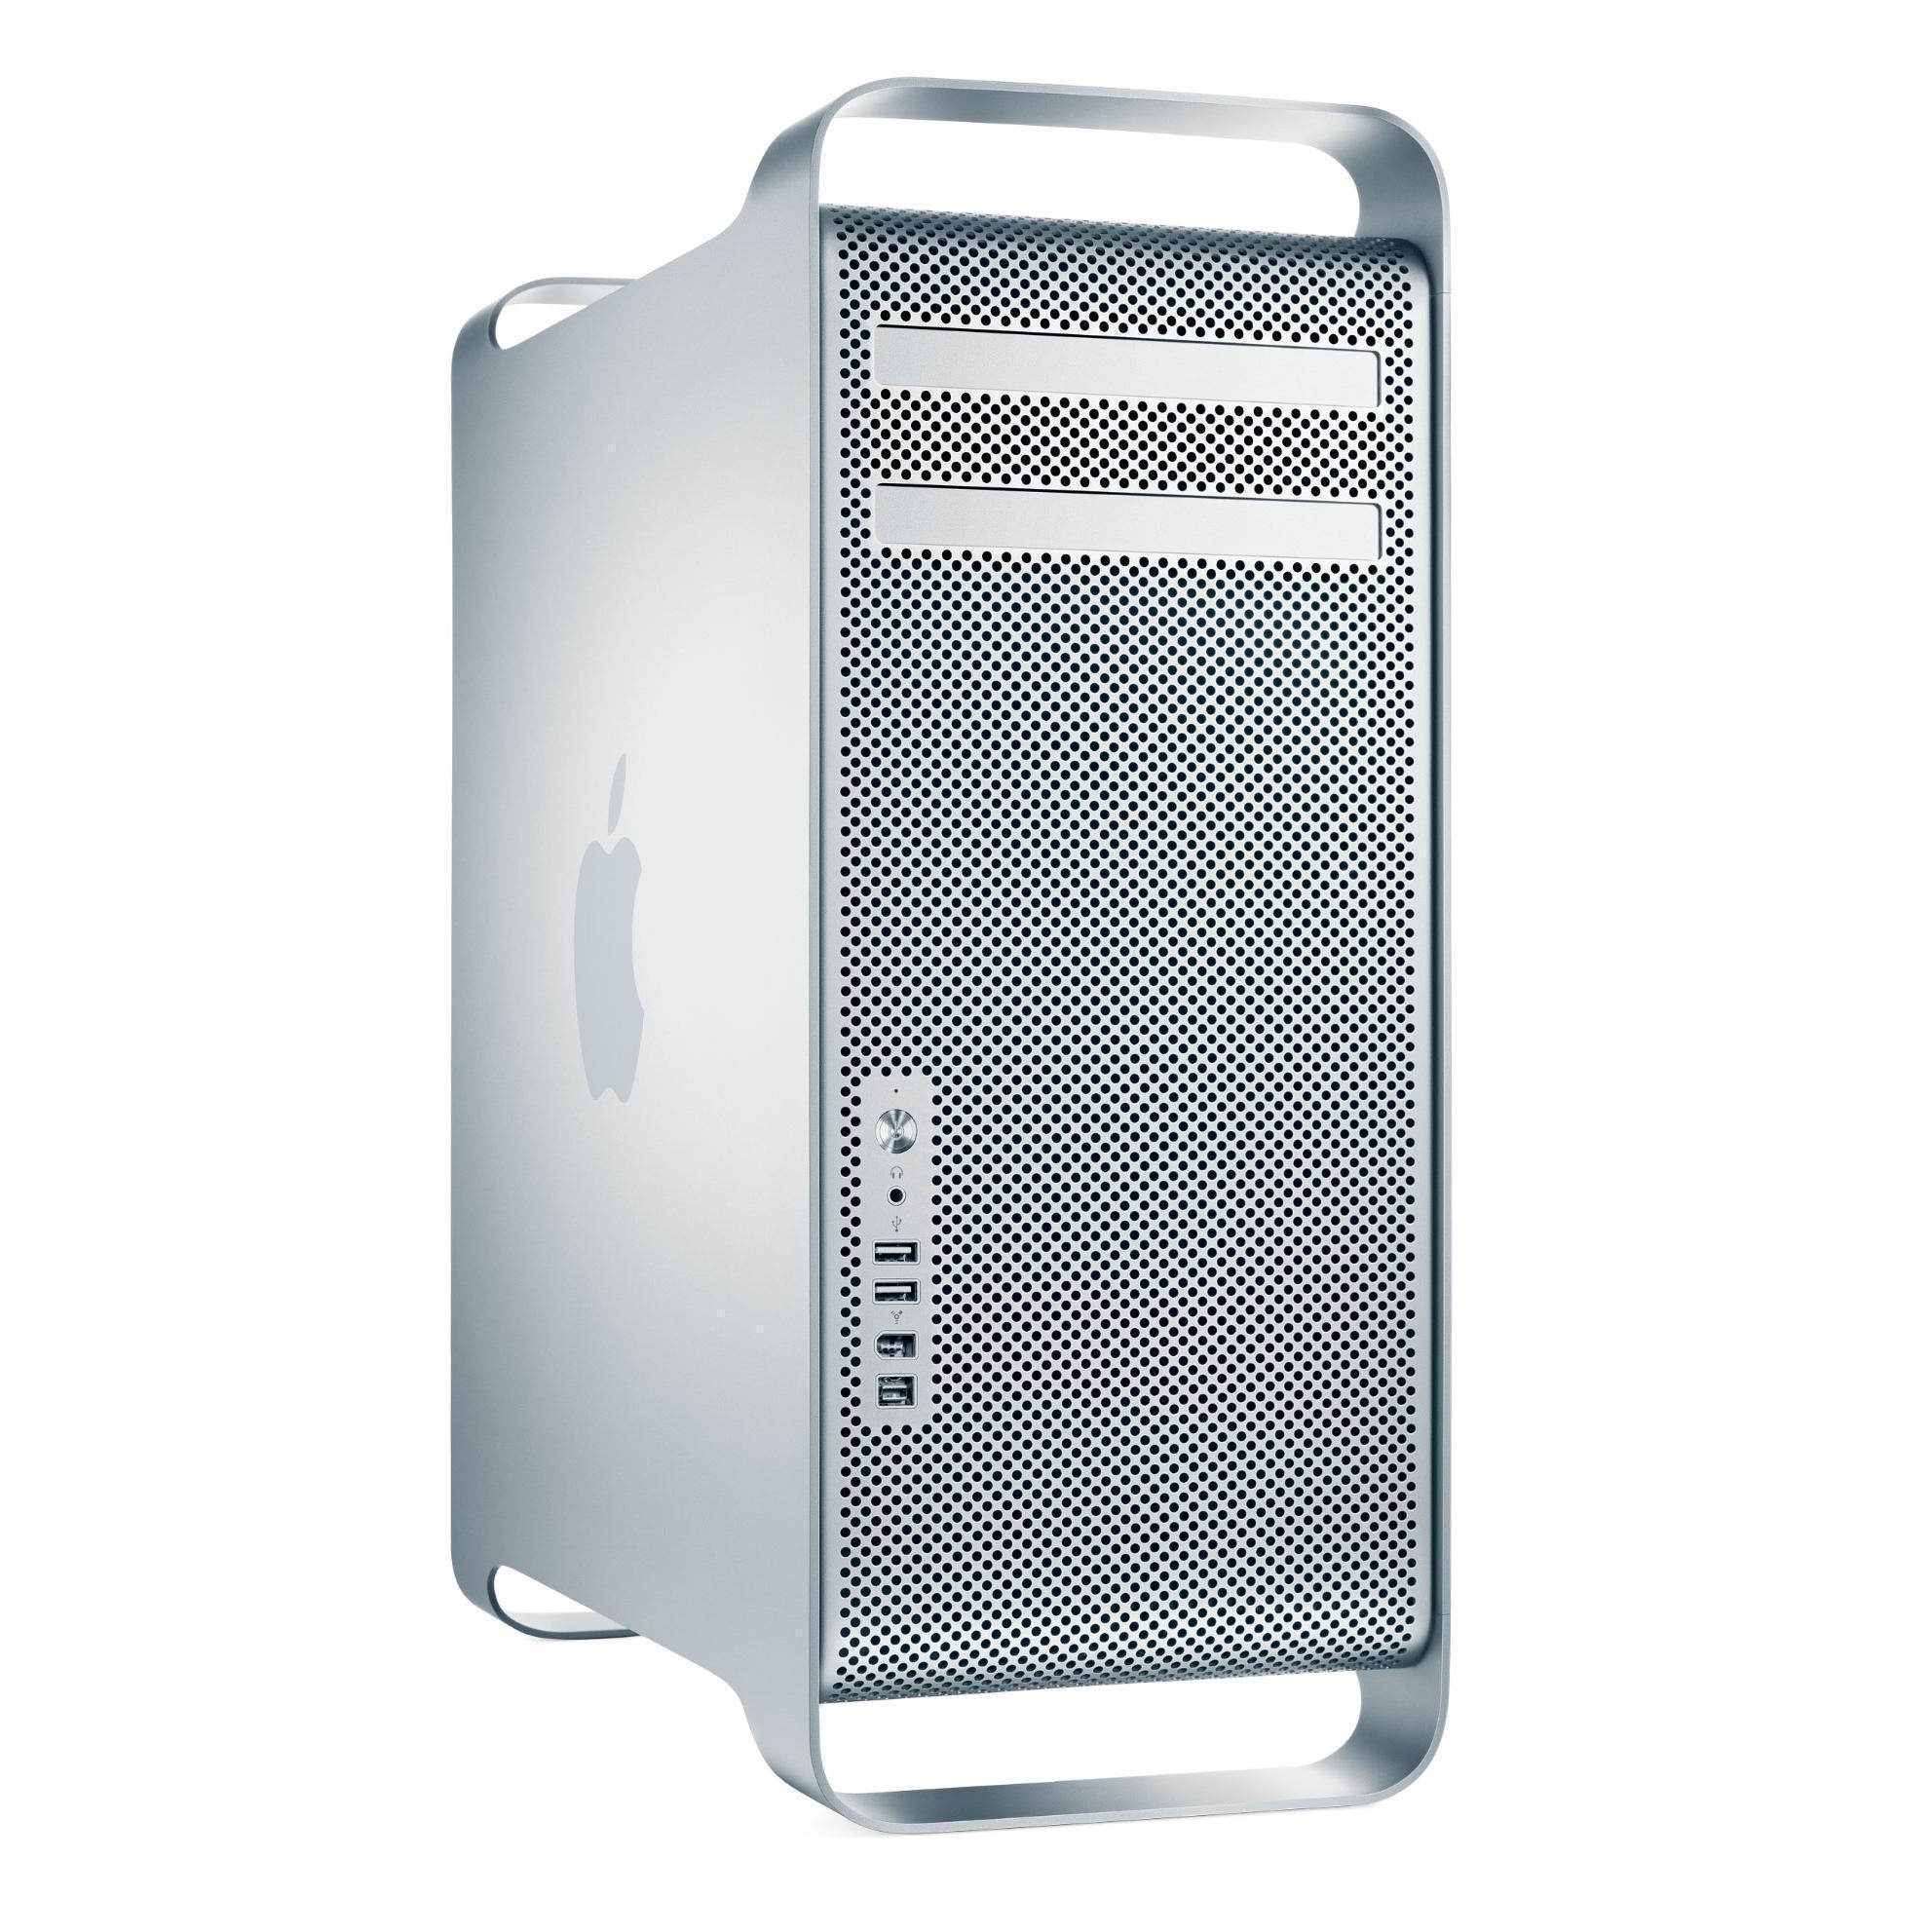 Mac Pro "Quad Core" (Original)